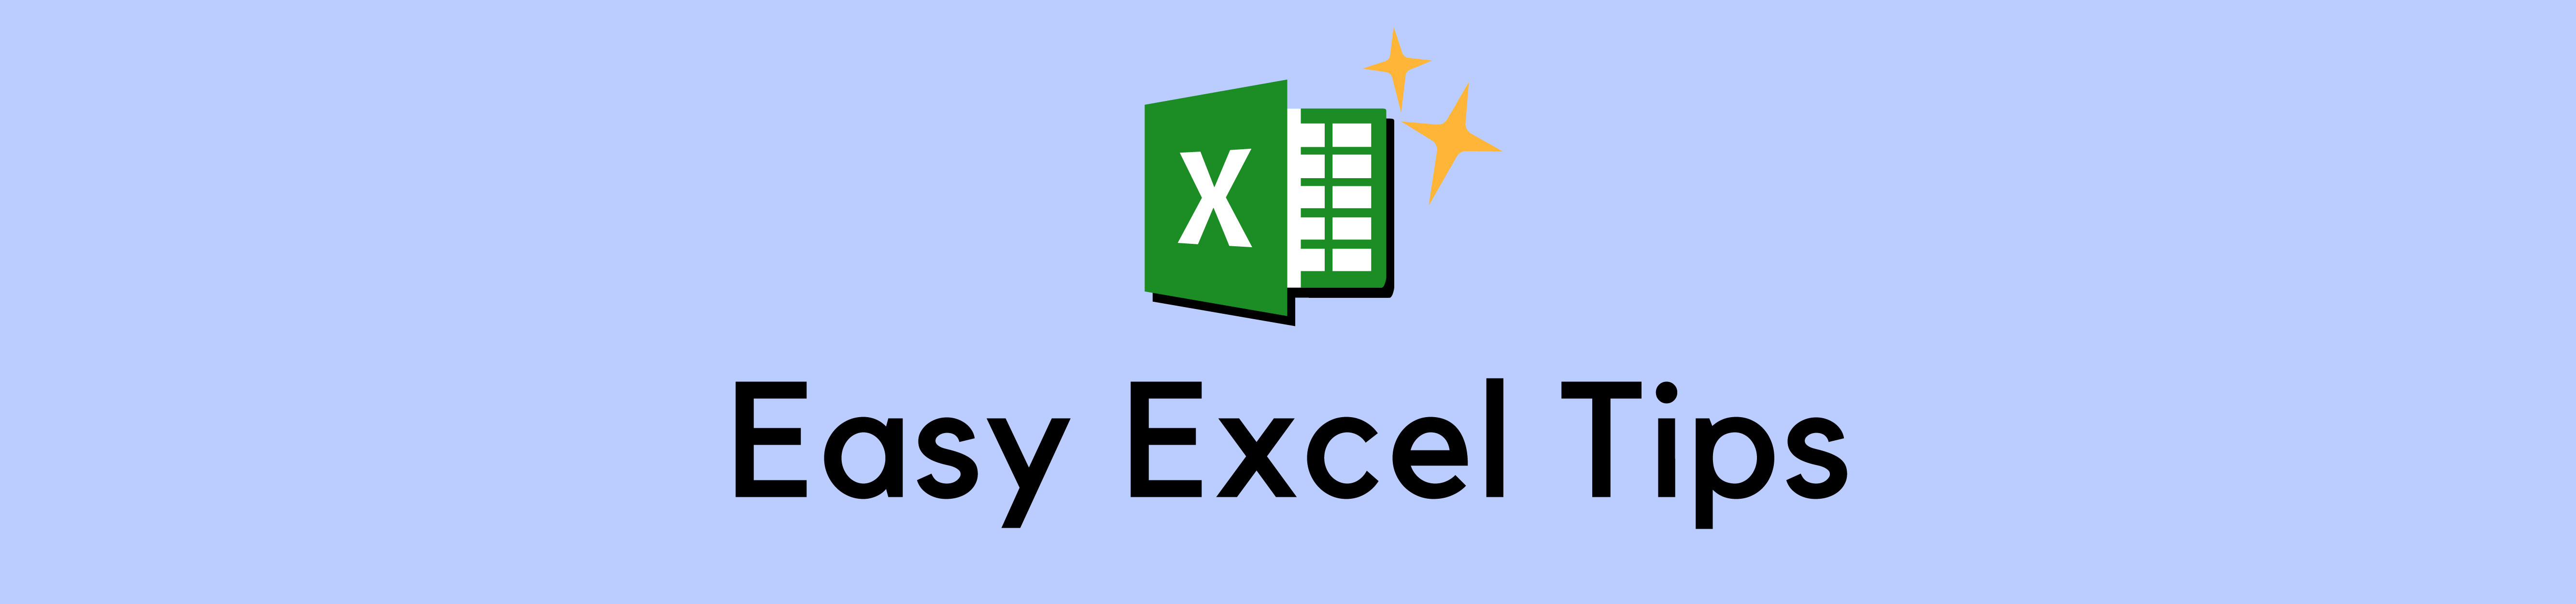 Easy Excel Tips header